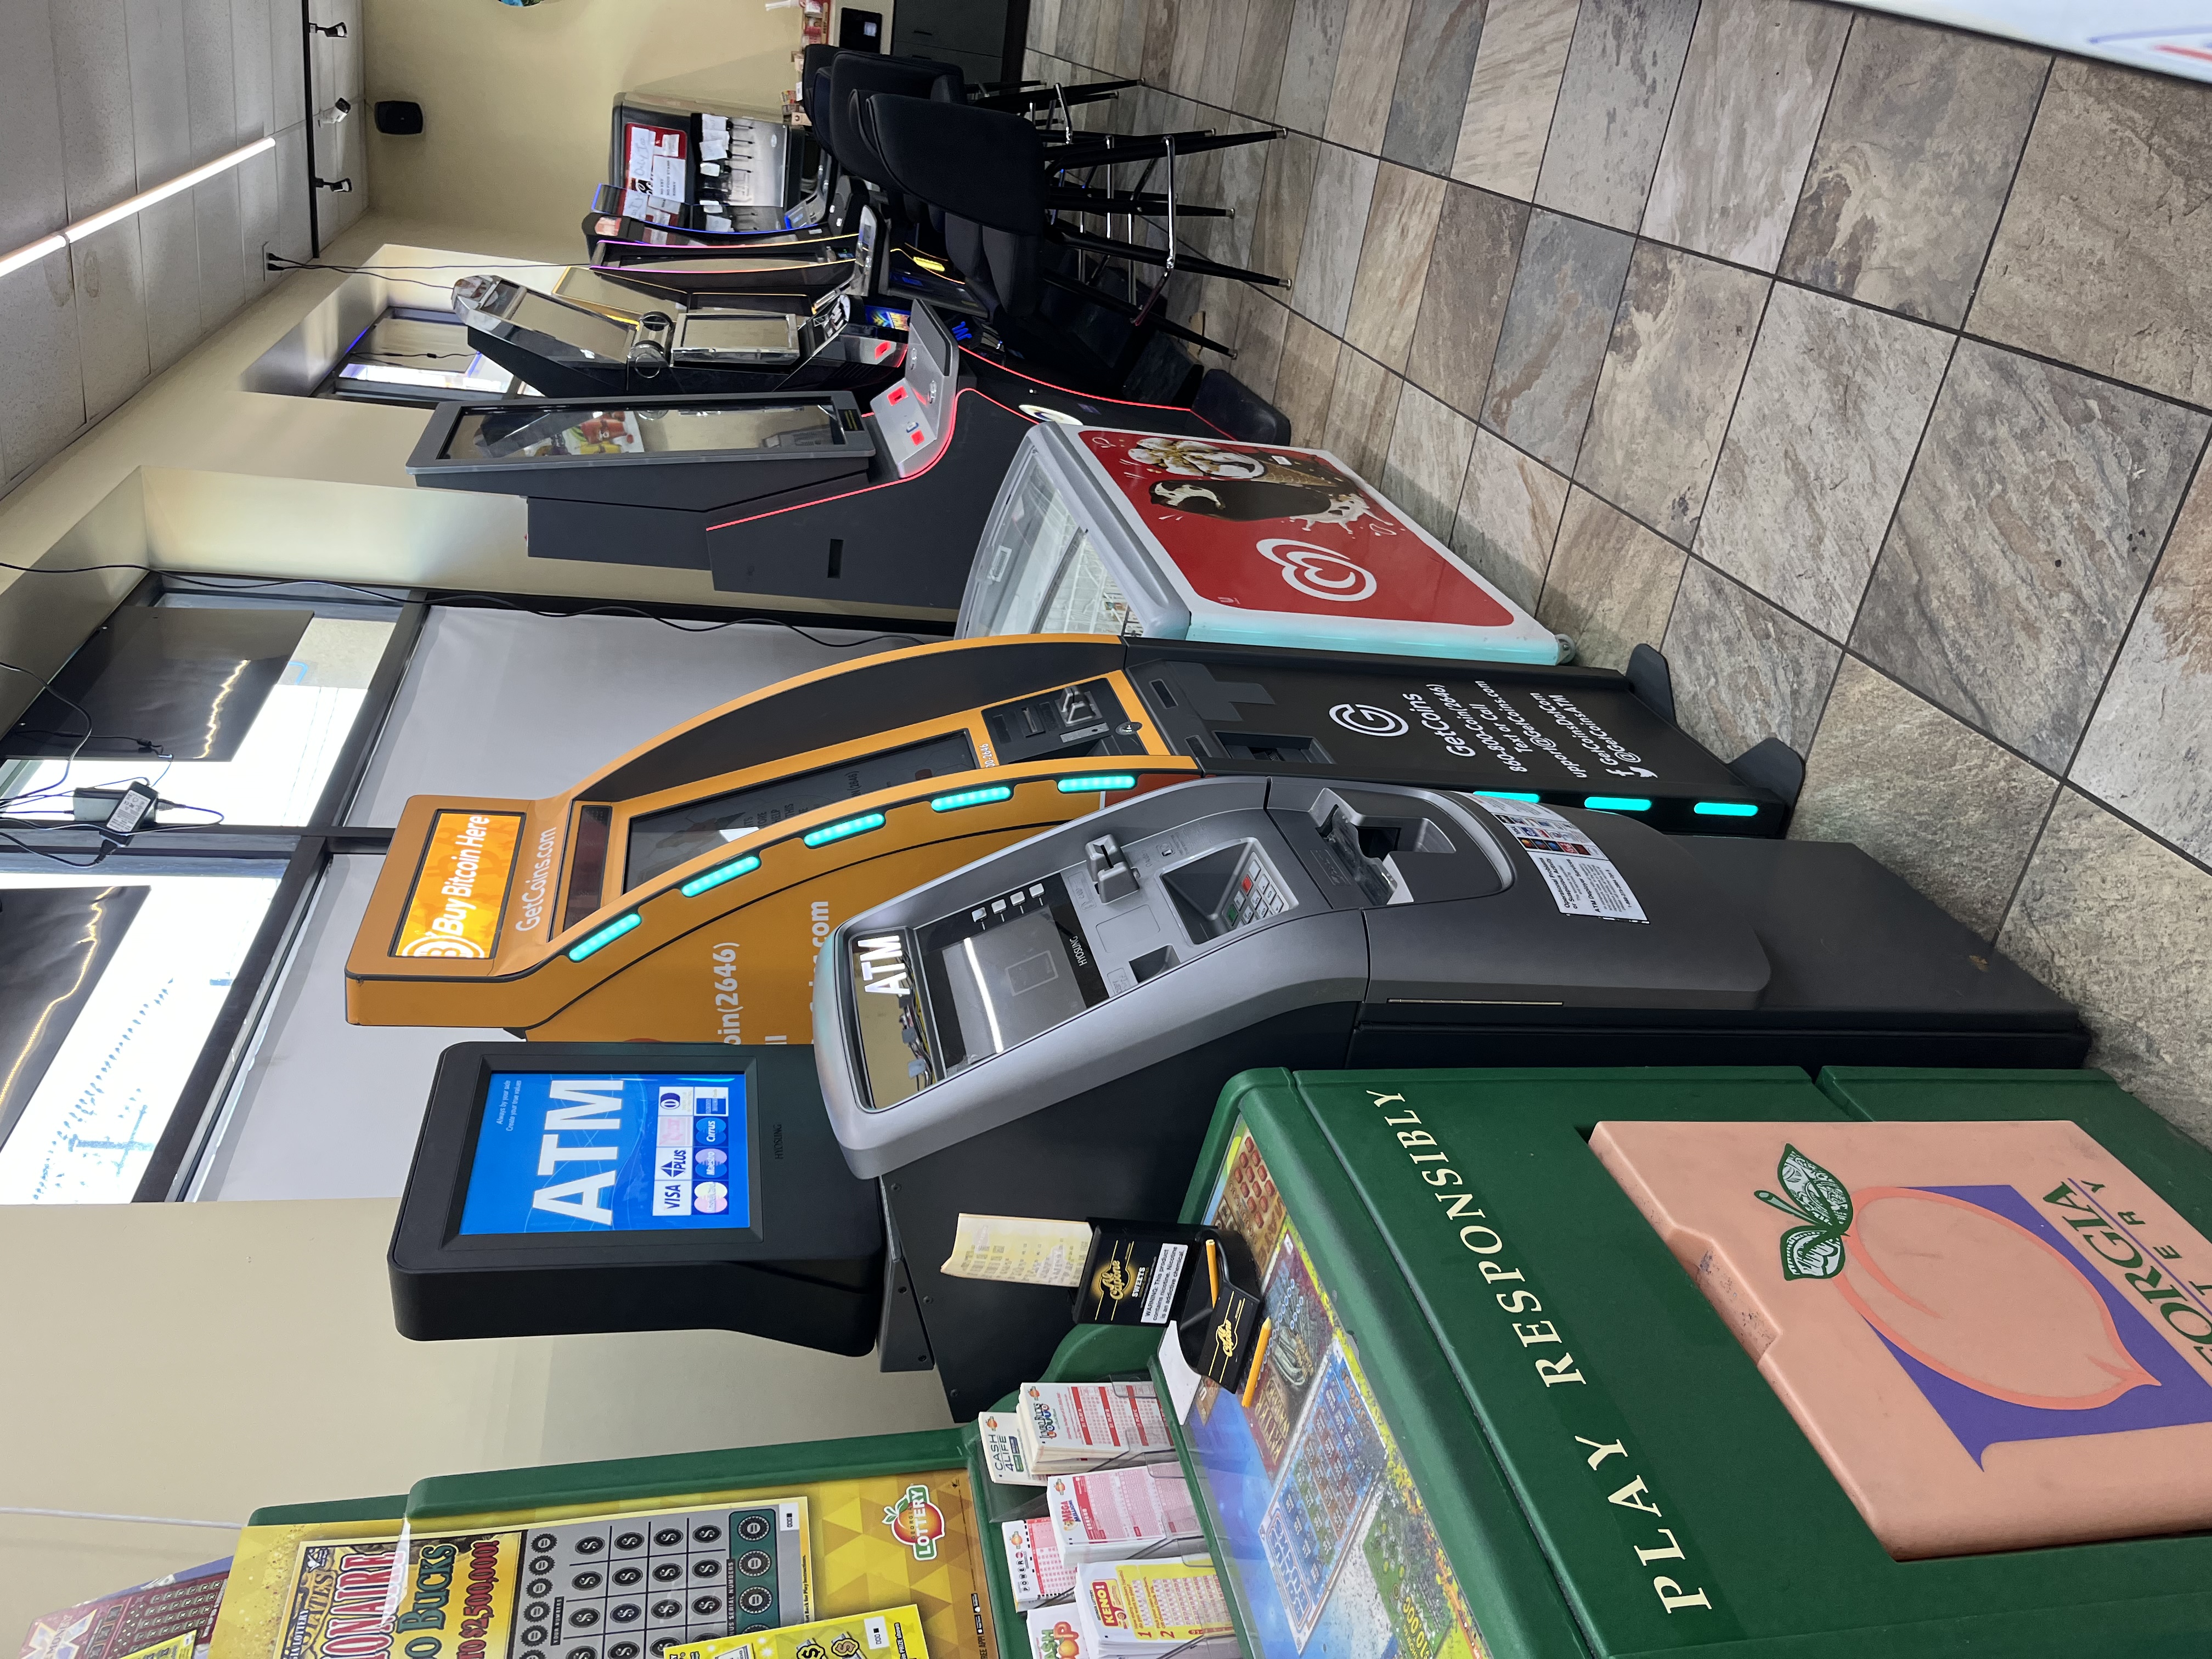 Getcoins - Bitcoin ATM - Inside of BP Food Mart in Atlanta, Georgia